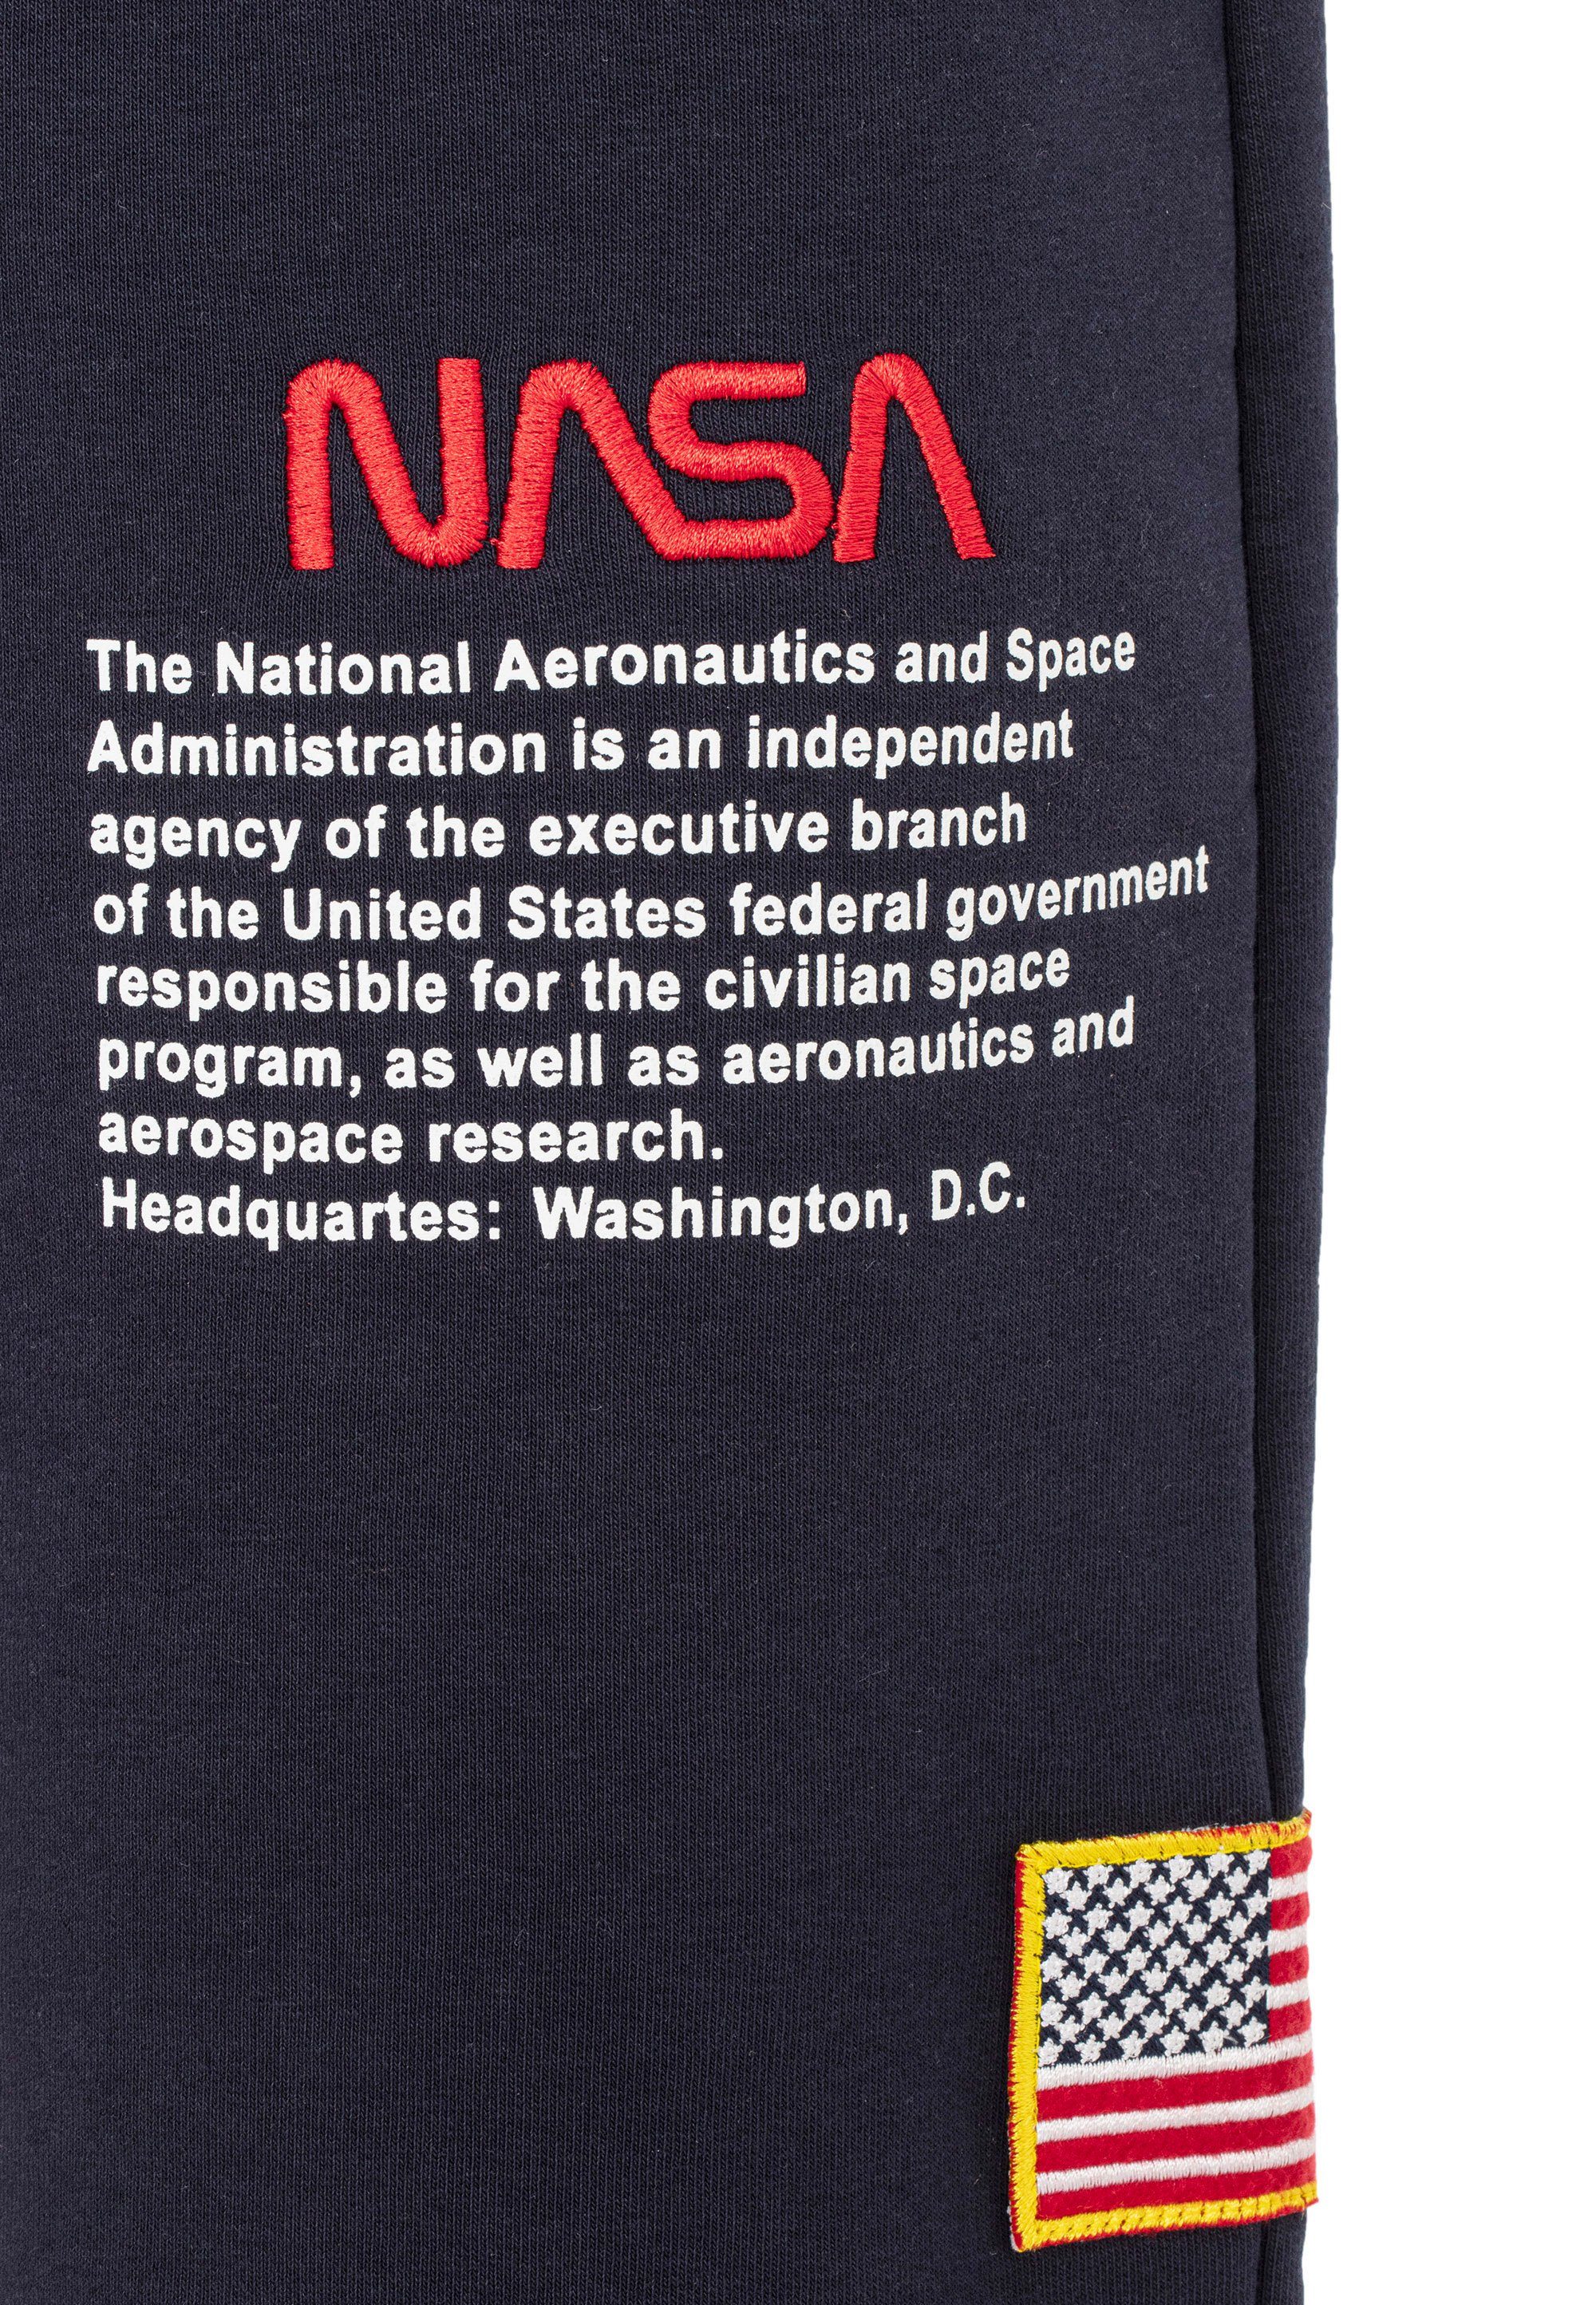 RedBridge Shorts Plano mit NASA-Motiv gesticktem dunkelblau